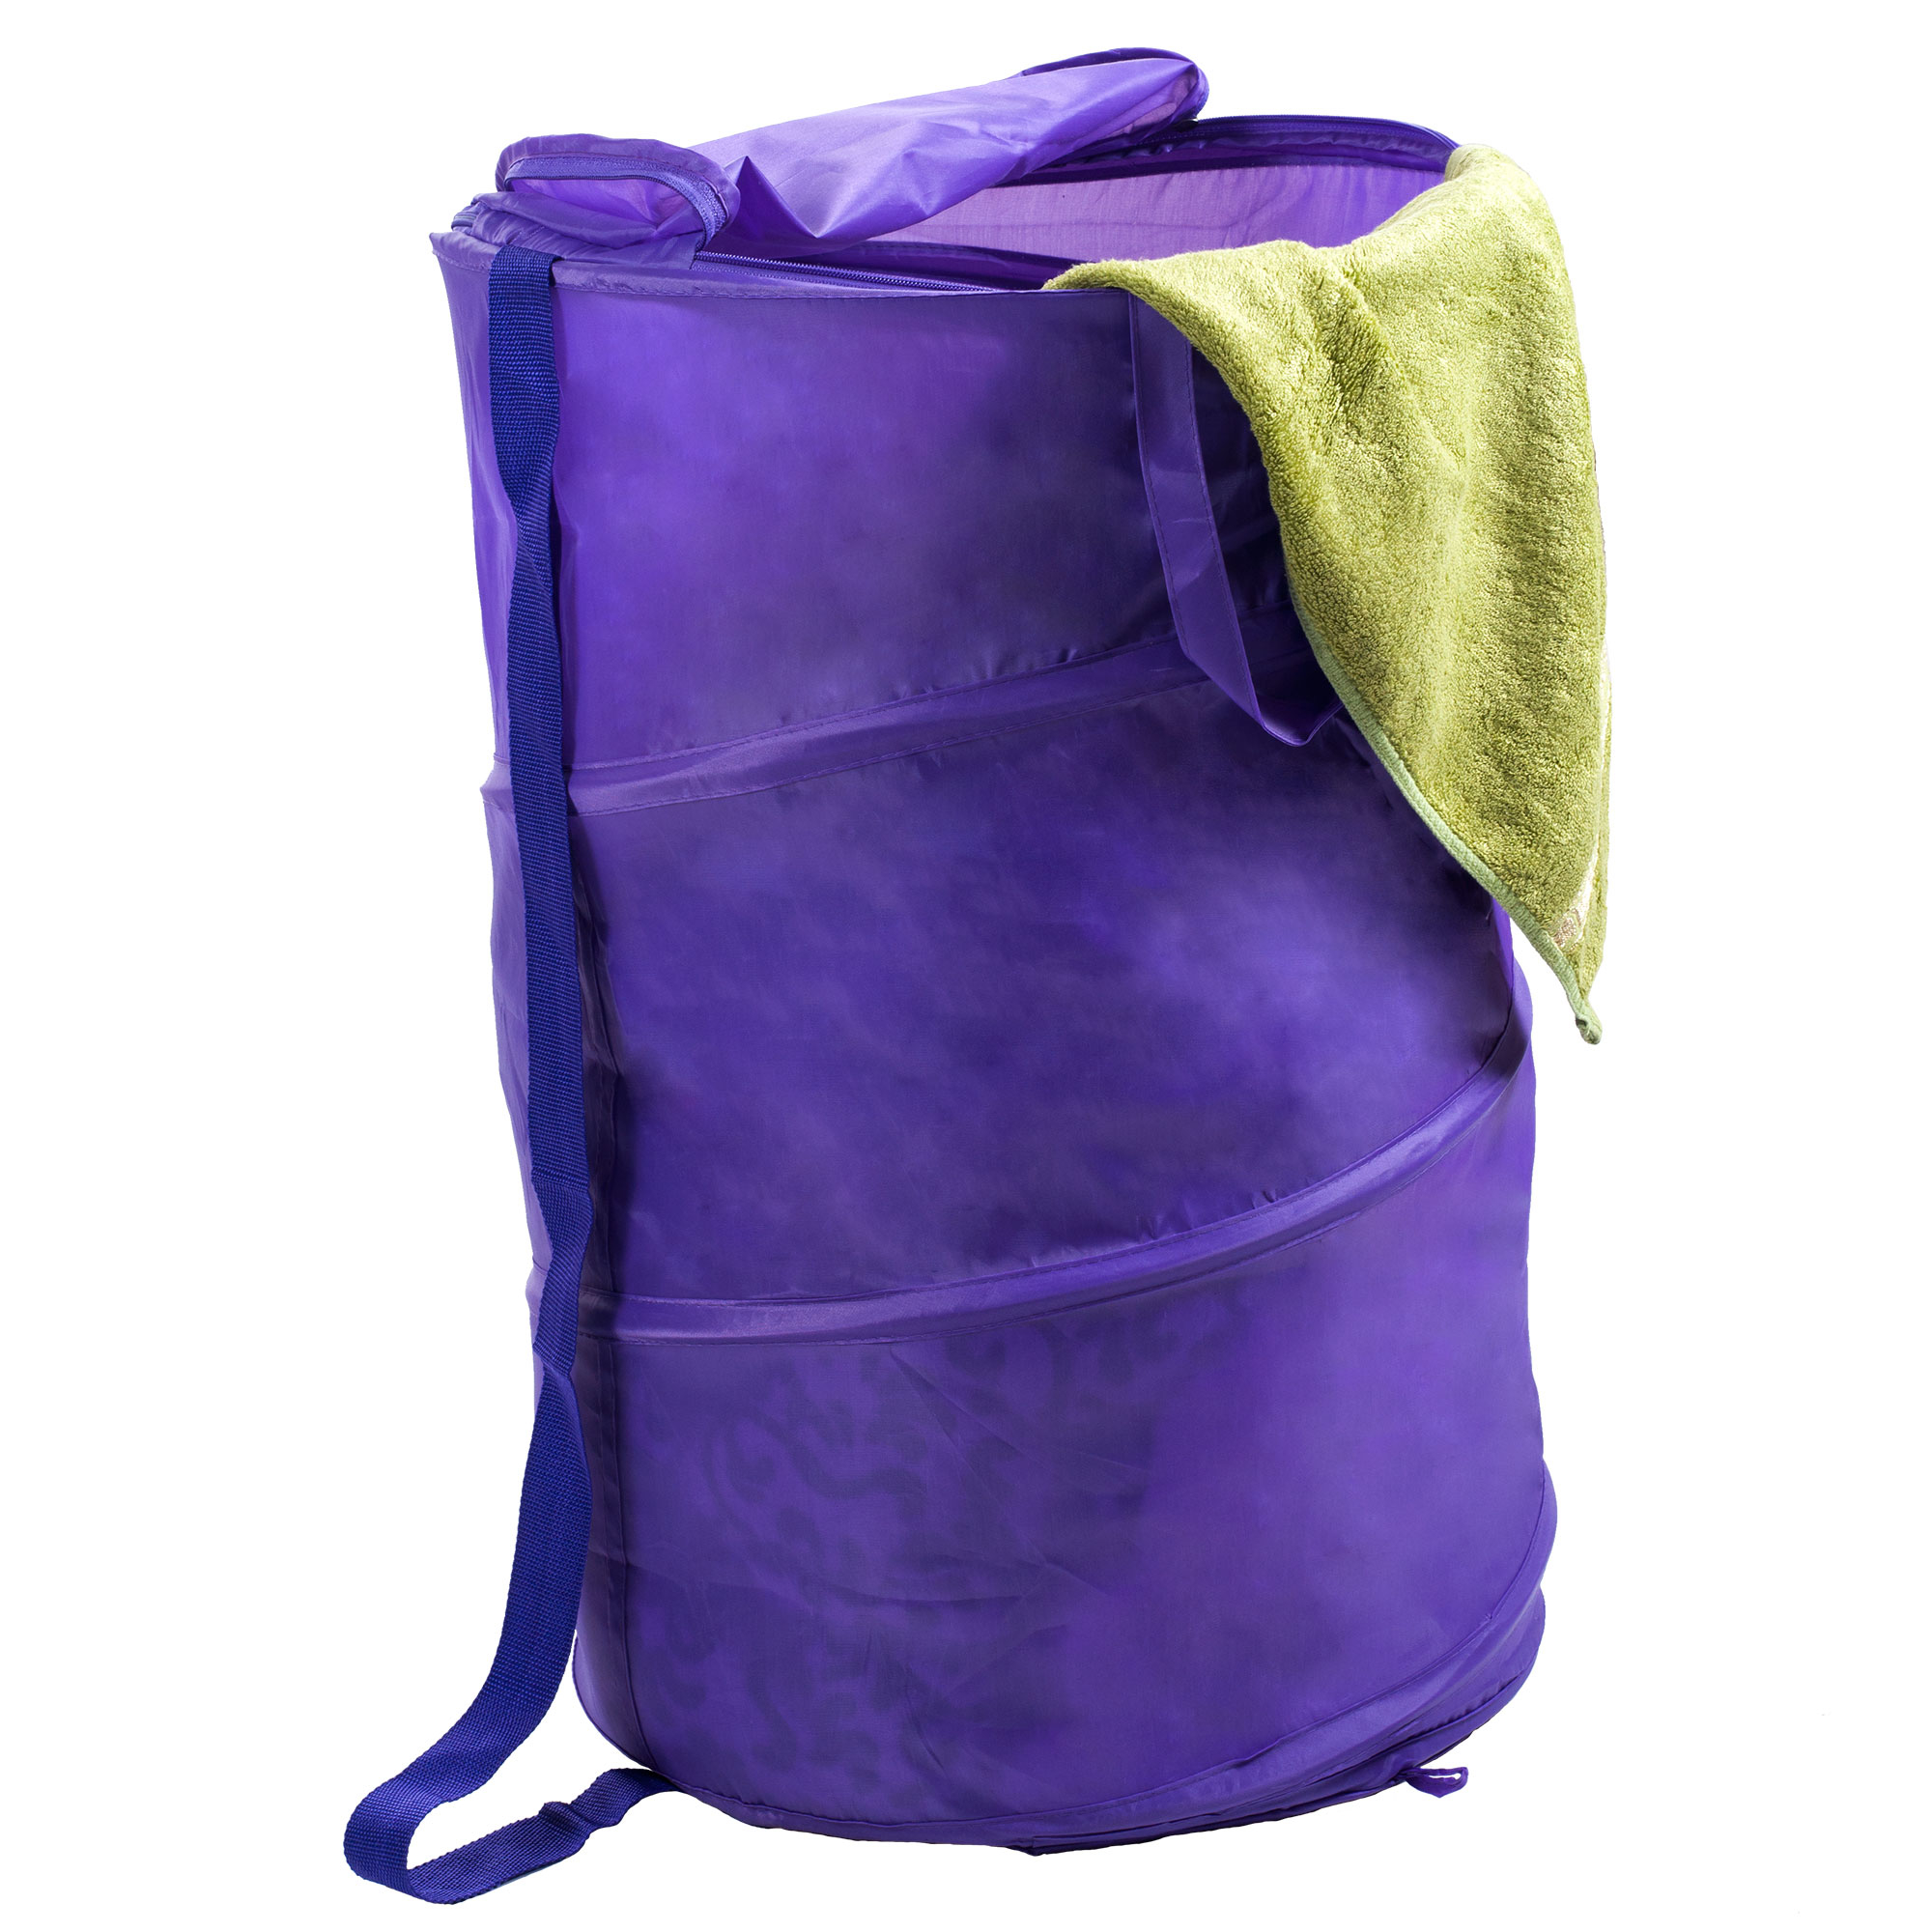 Lavish Home Breathable Pop Up Laundry Clothes Hamper - Purple